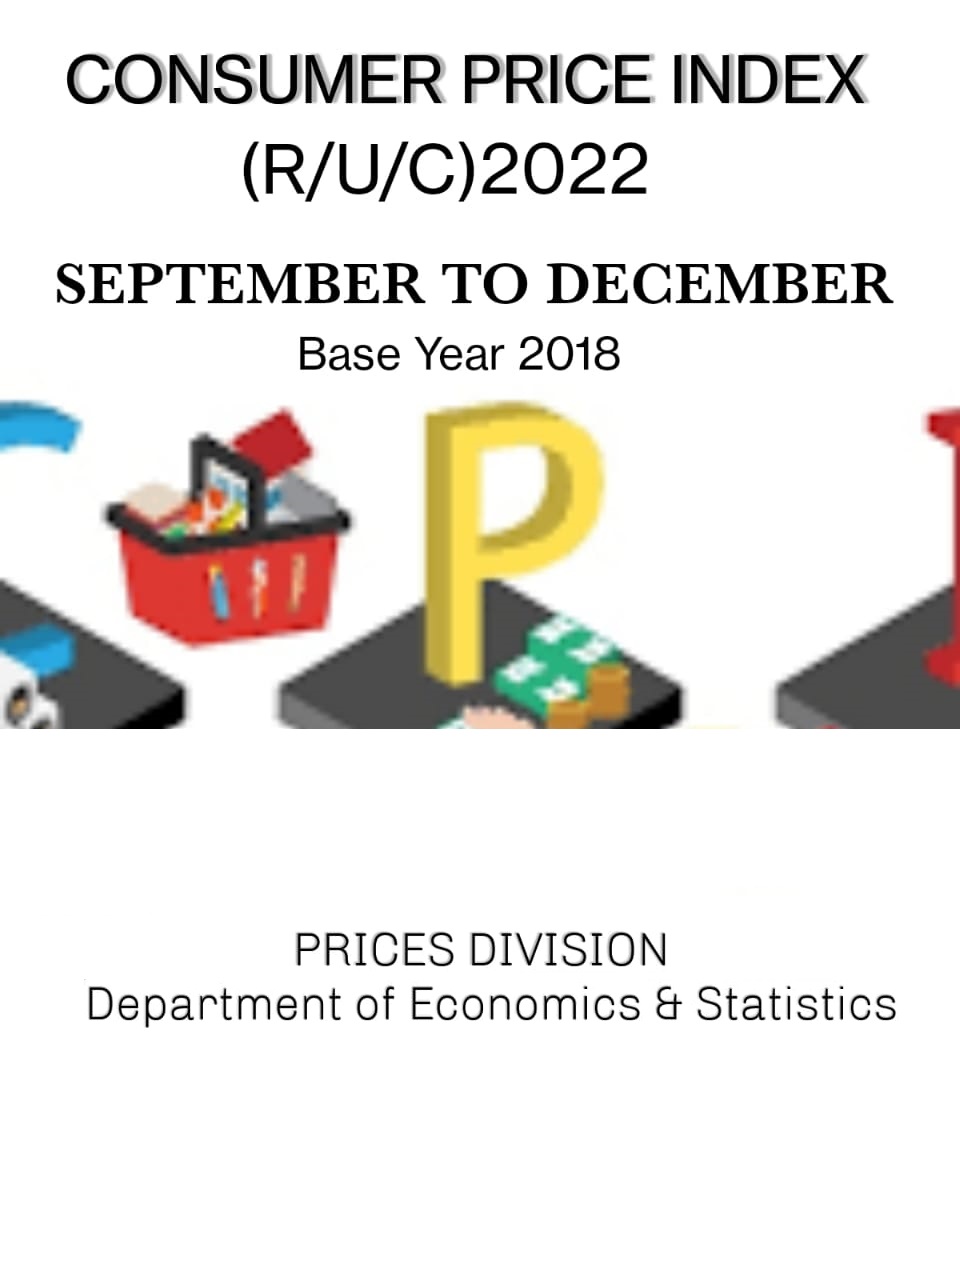 CONSUMER PRICE INDEX (R/U/C) SEPTEMBER, OCTOBER,NOVEMBER,DECEMBER2022